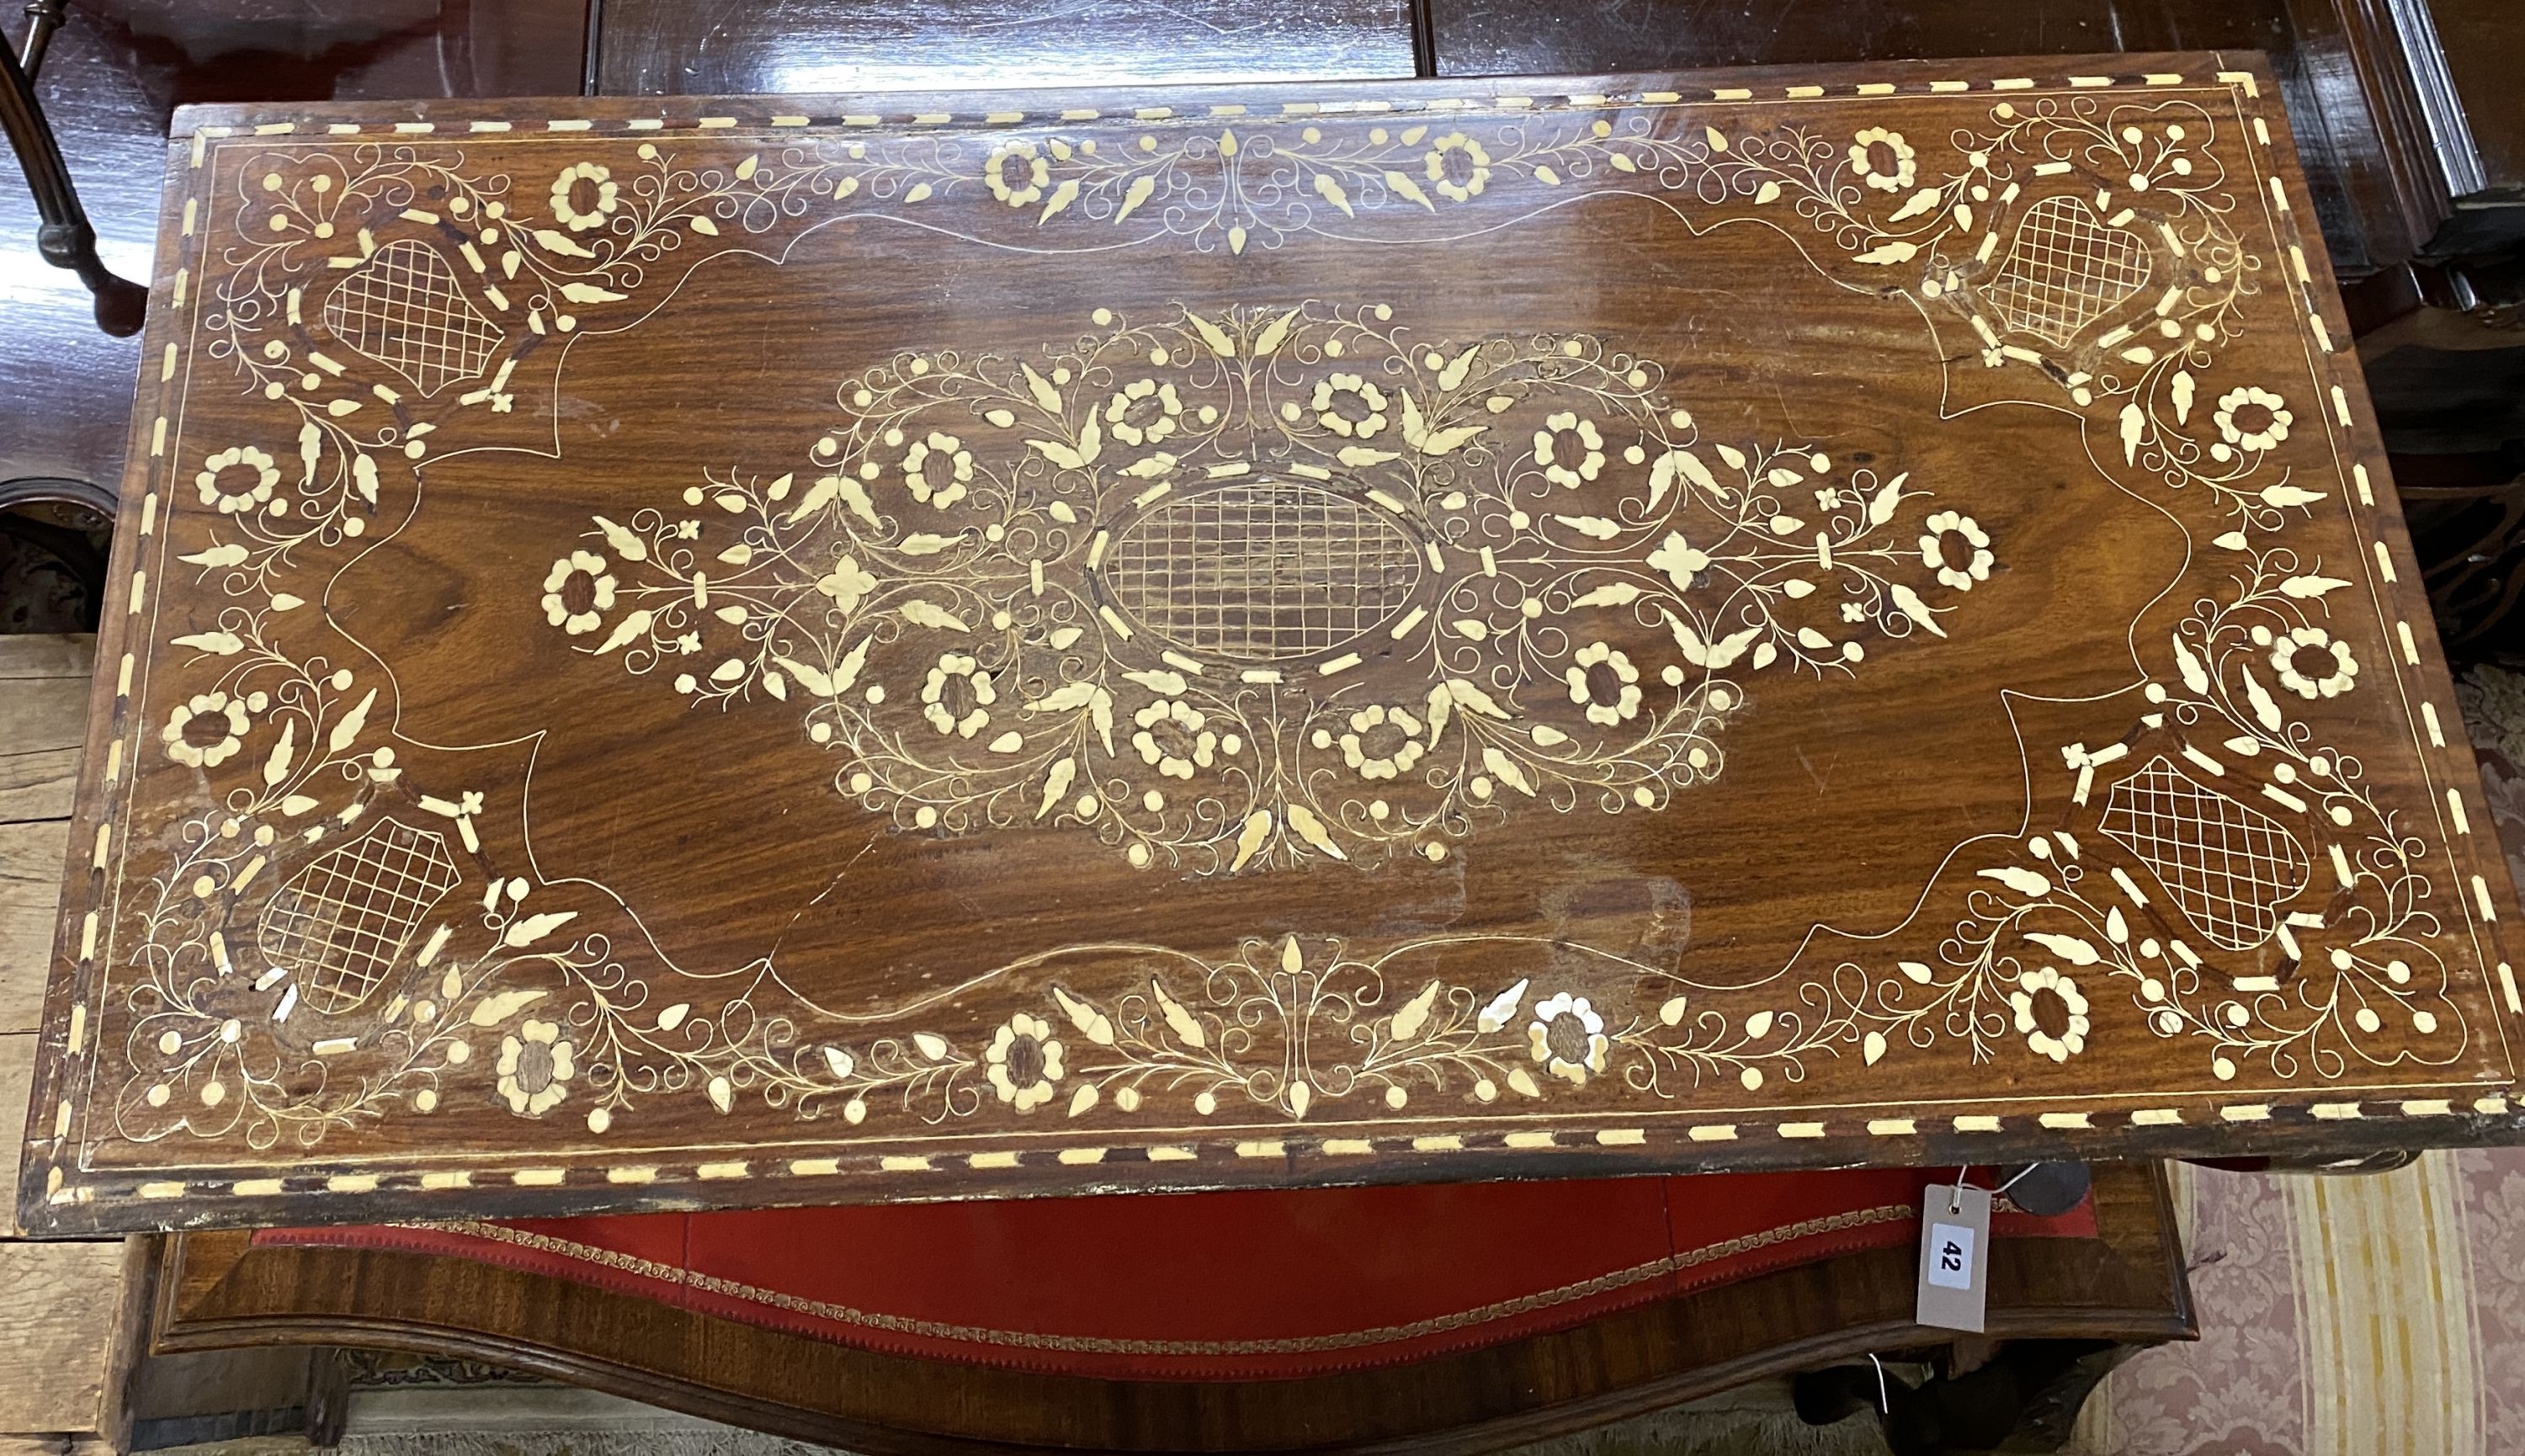 An Indian rectangular inlaid hardwood table, width 92cm, depth 46cm, height 42cm